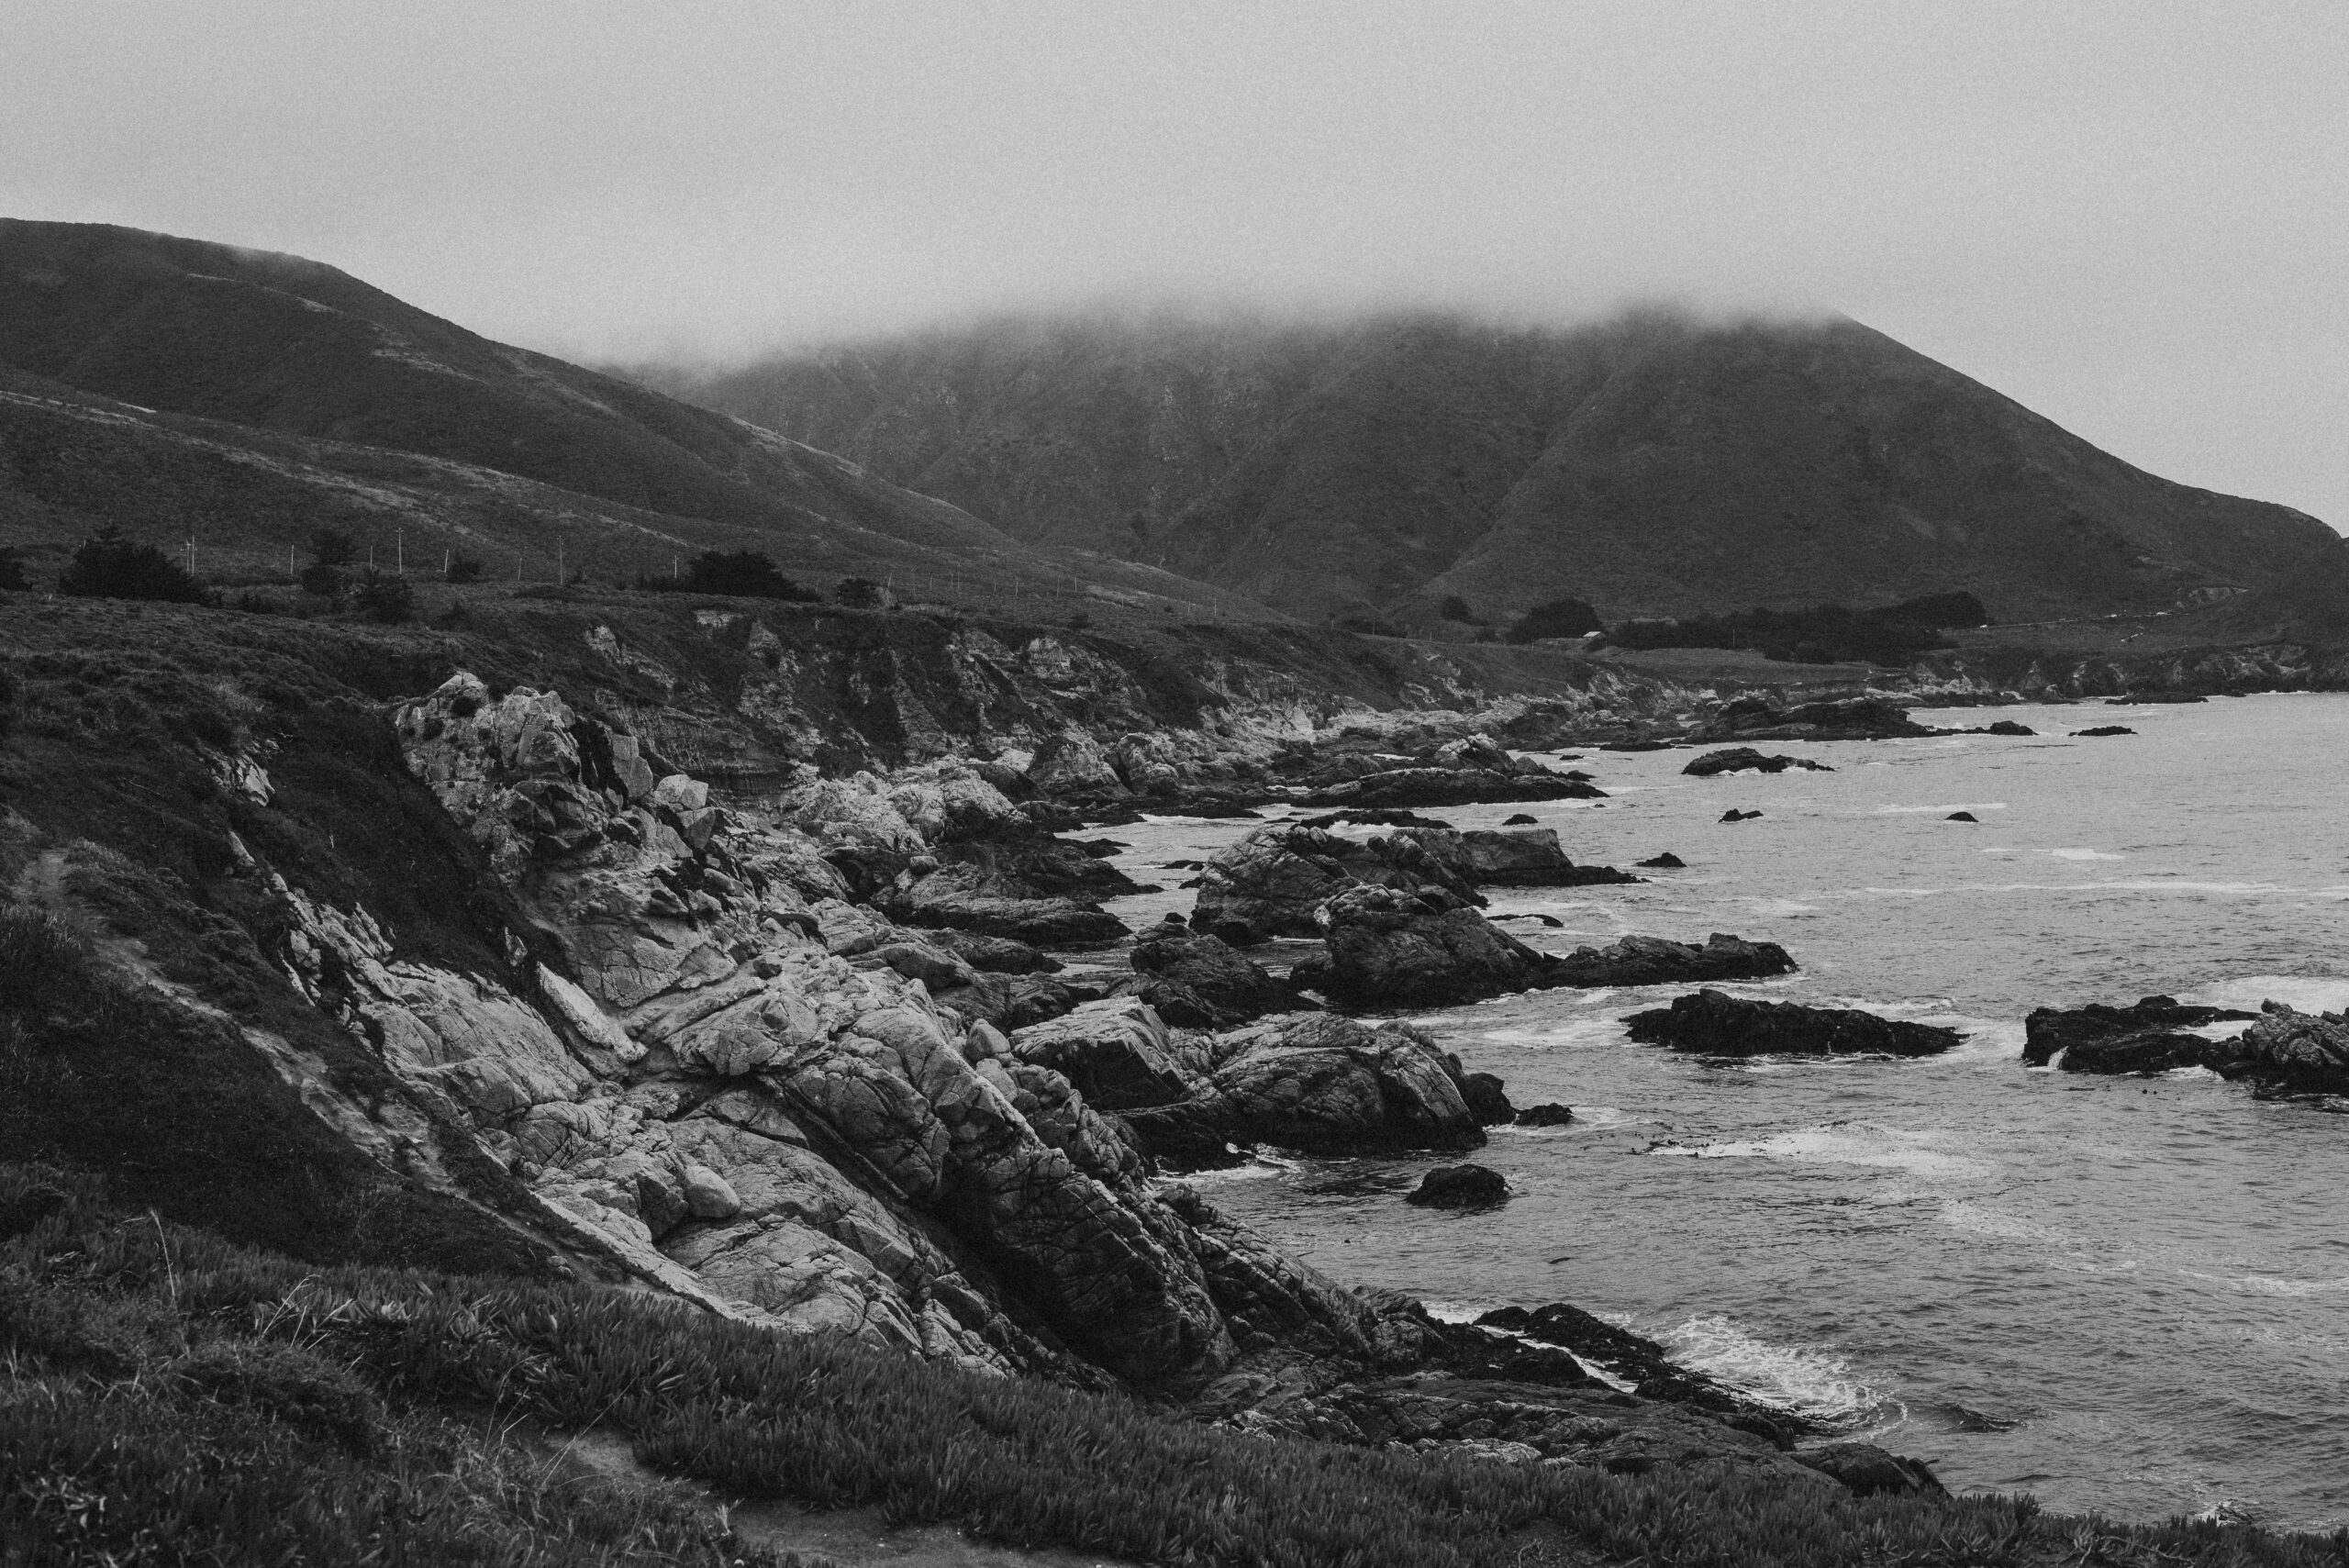 Black and white photograph of the Big Sur coastline